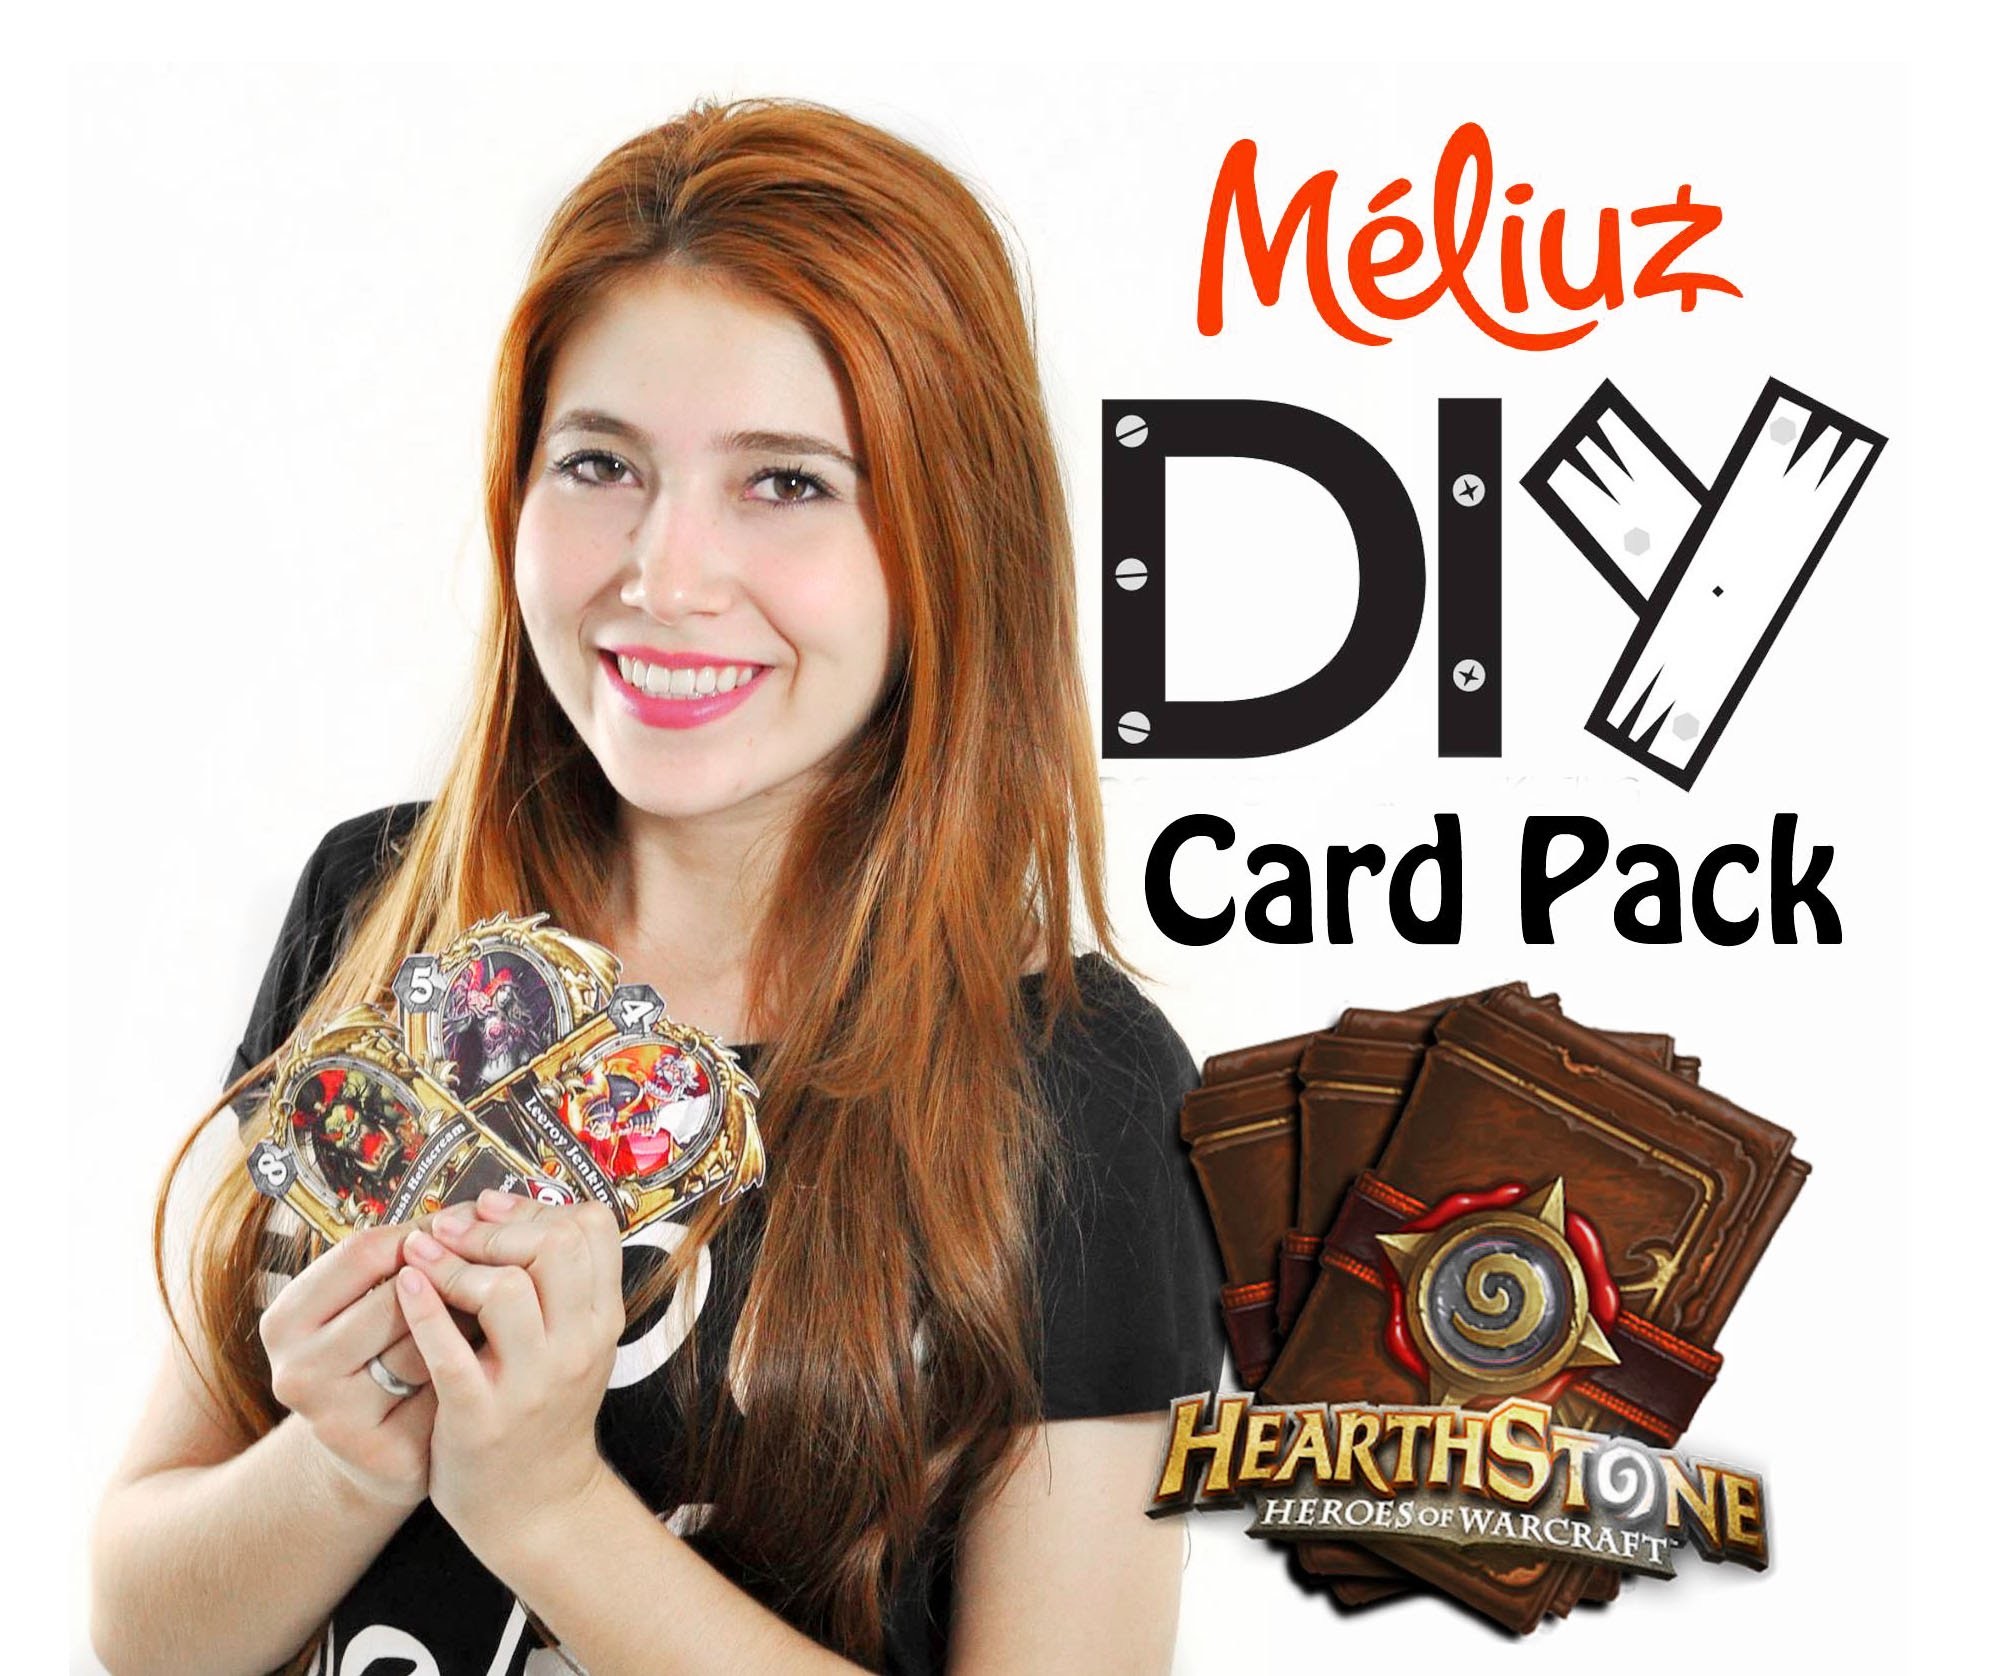 DIY : Card Pack do HearthStone (Desafio Méliuz 3)